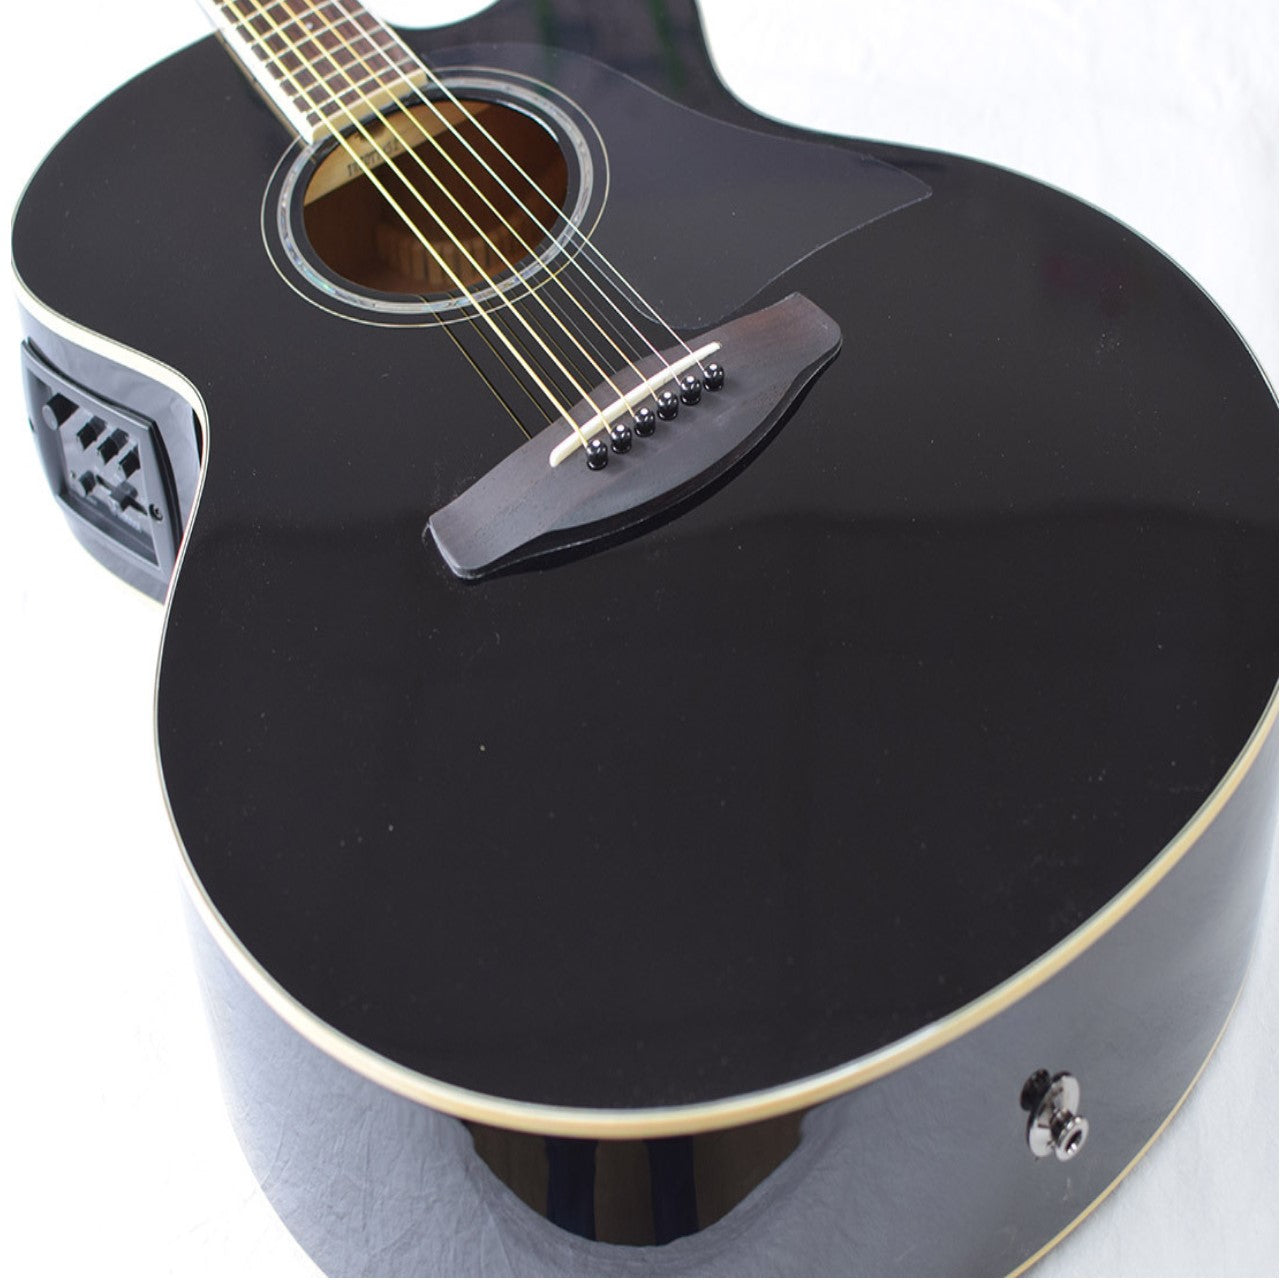 Yamaha Guitarra Electroacustica Serie CPX600 en color Negro